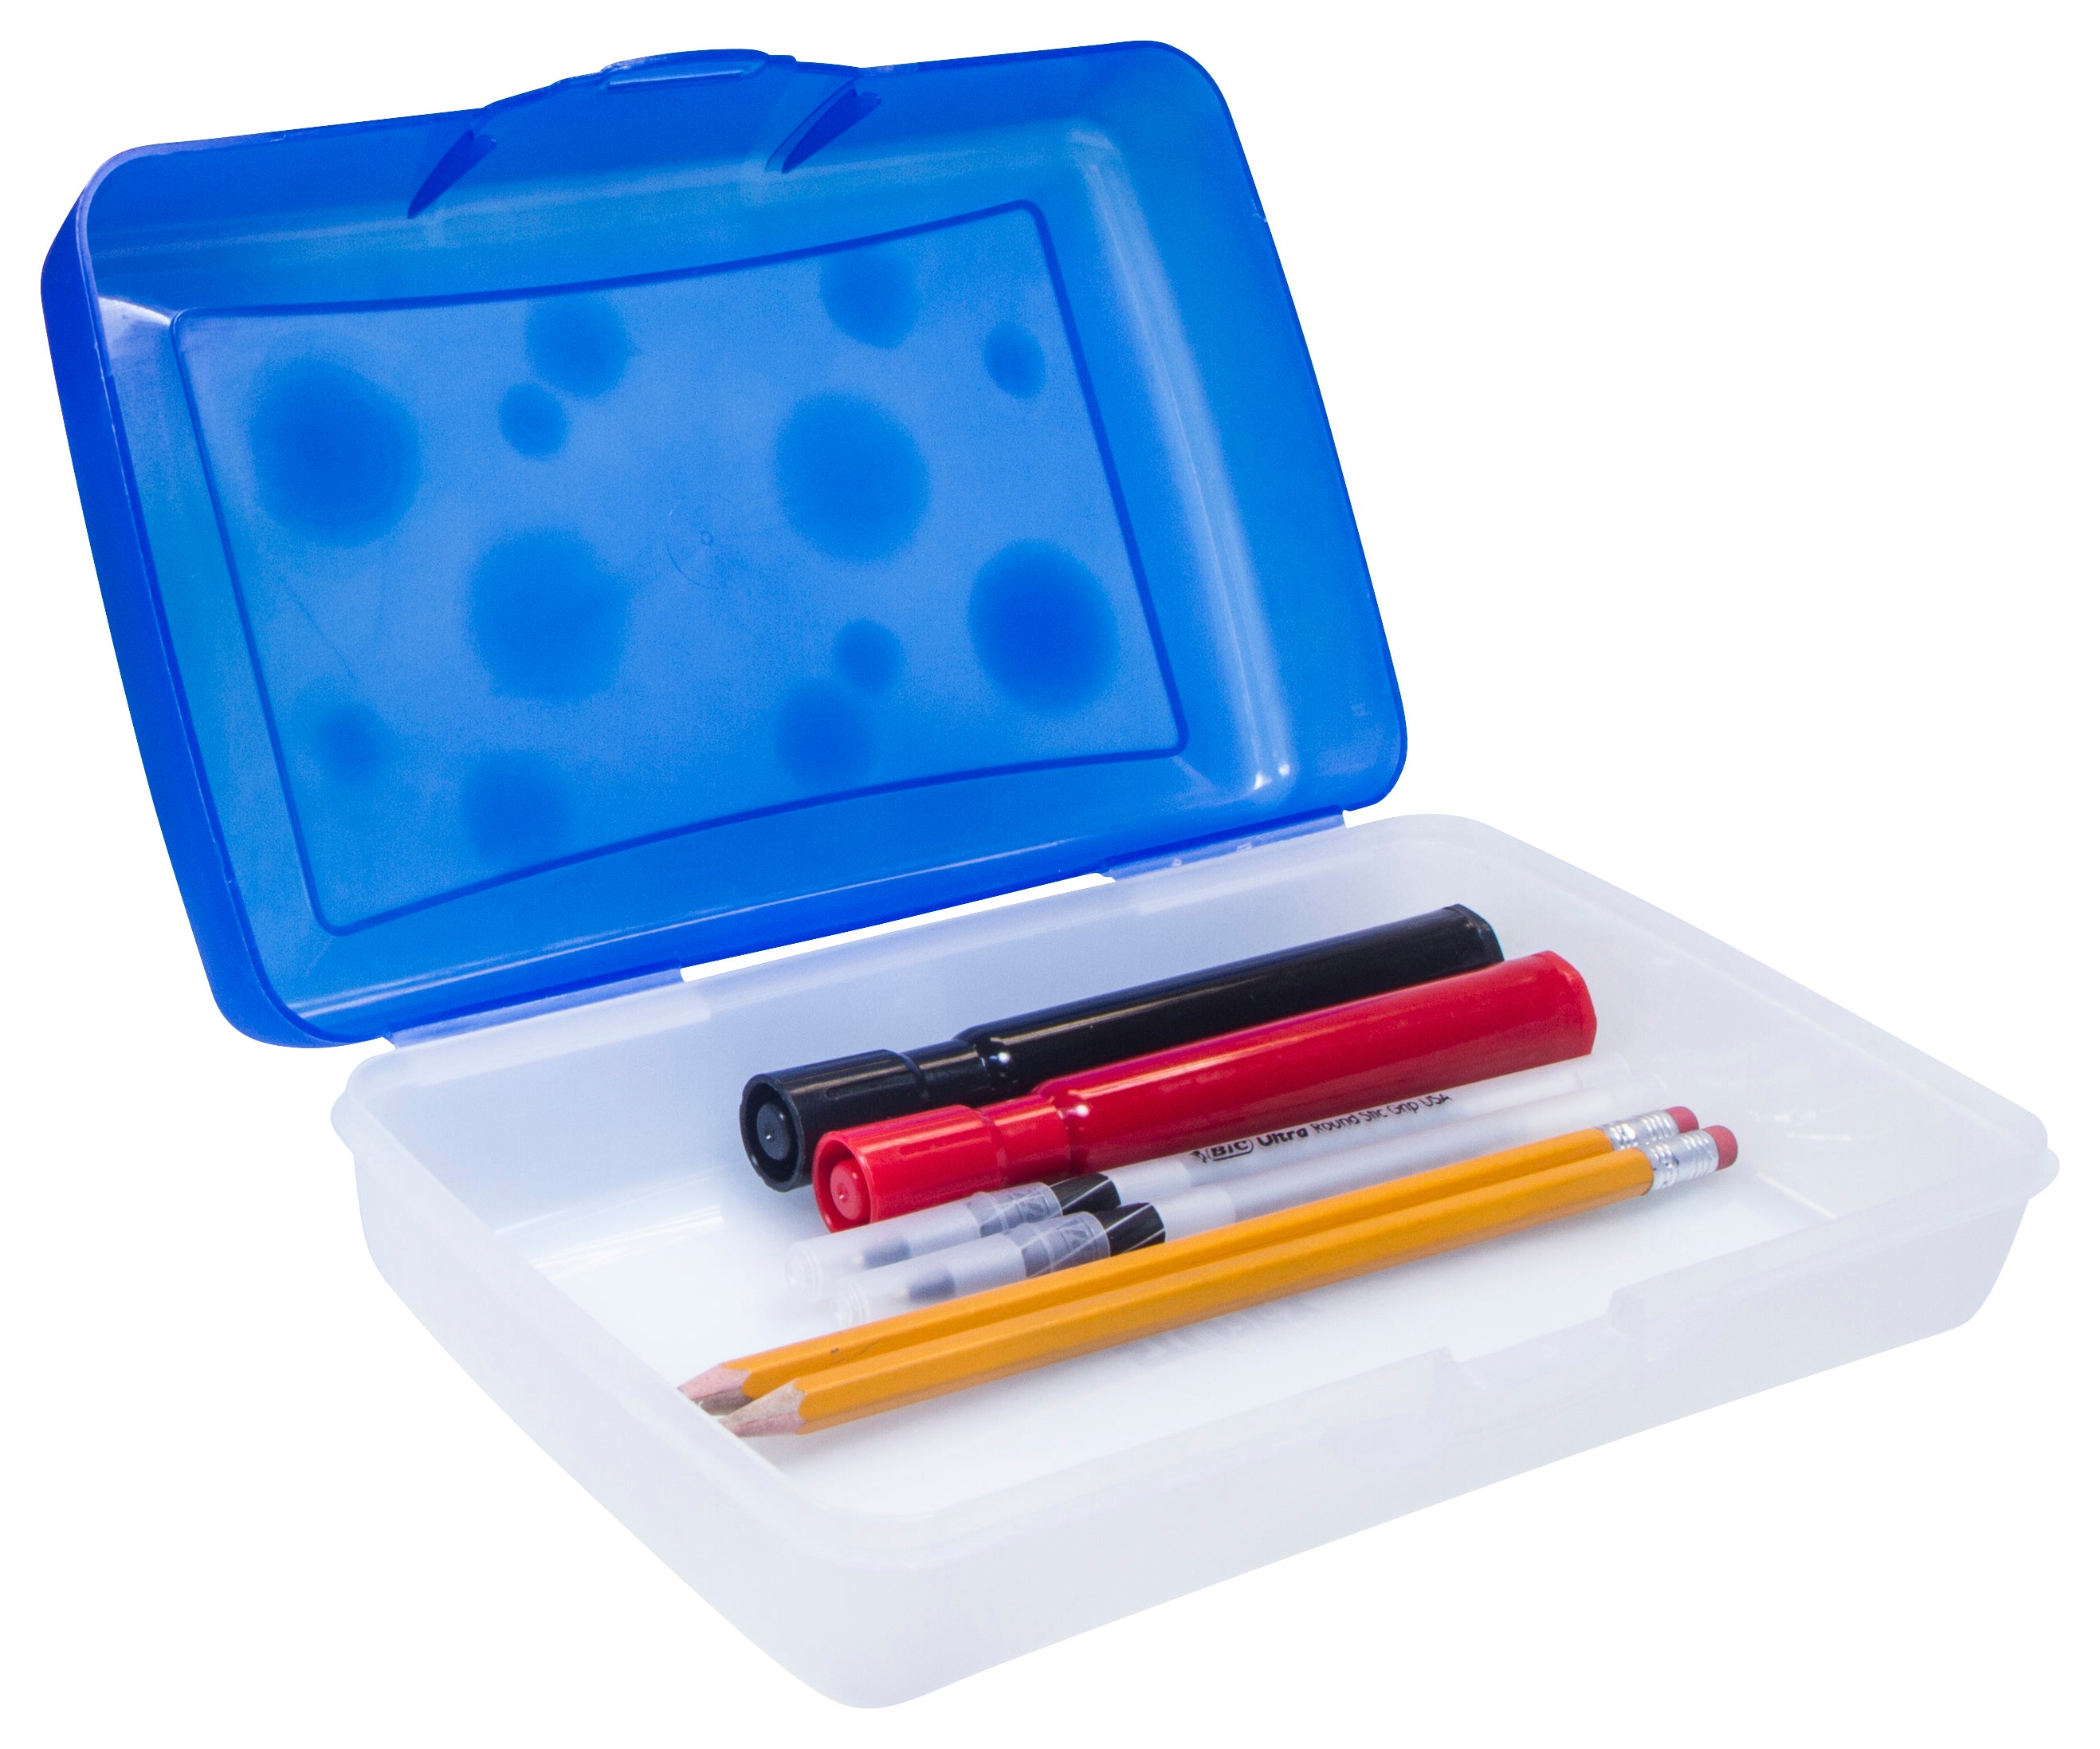 Storex, Stretch Pencil Case, Plastic, 5 1/2 x 13 1/2 x 2 1/2 inches, Mardel